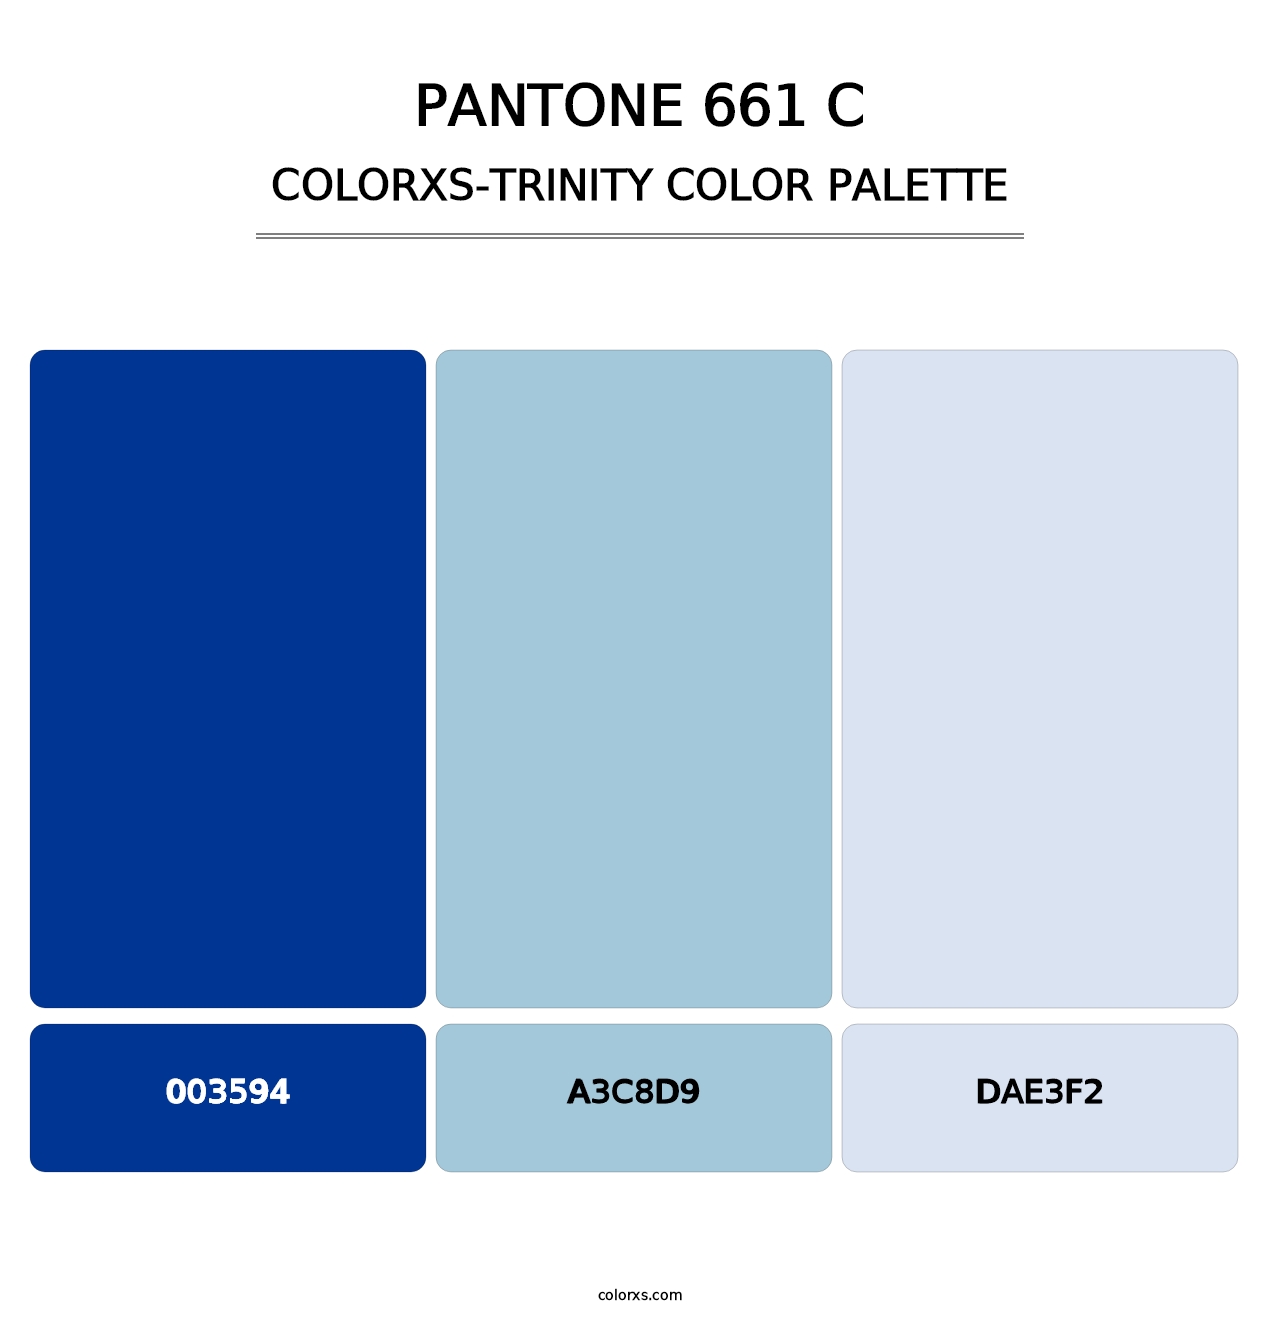 PANTONE 661 C - Colorxs Trinity Palette